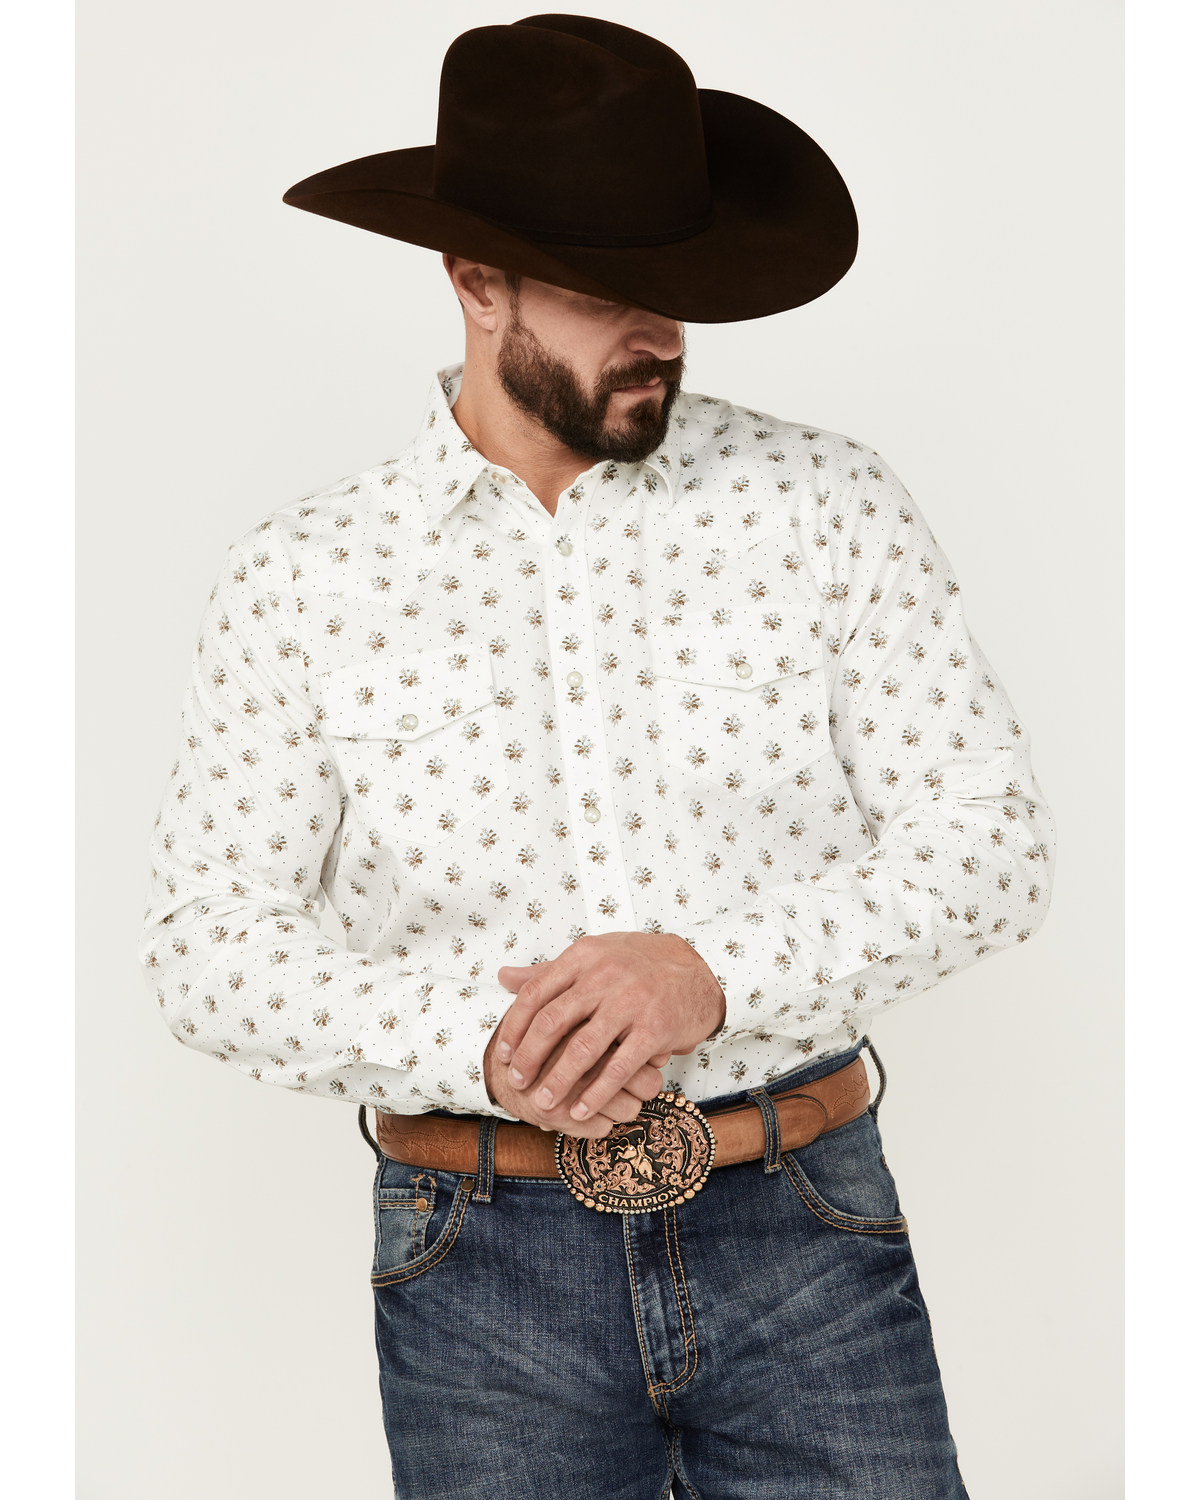 Gibson Trading Co Men's Conrad Floral Print Long Sleeve Pearl Snap Western Shirt